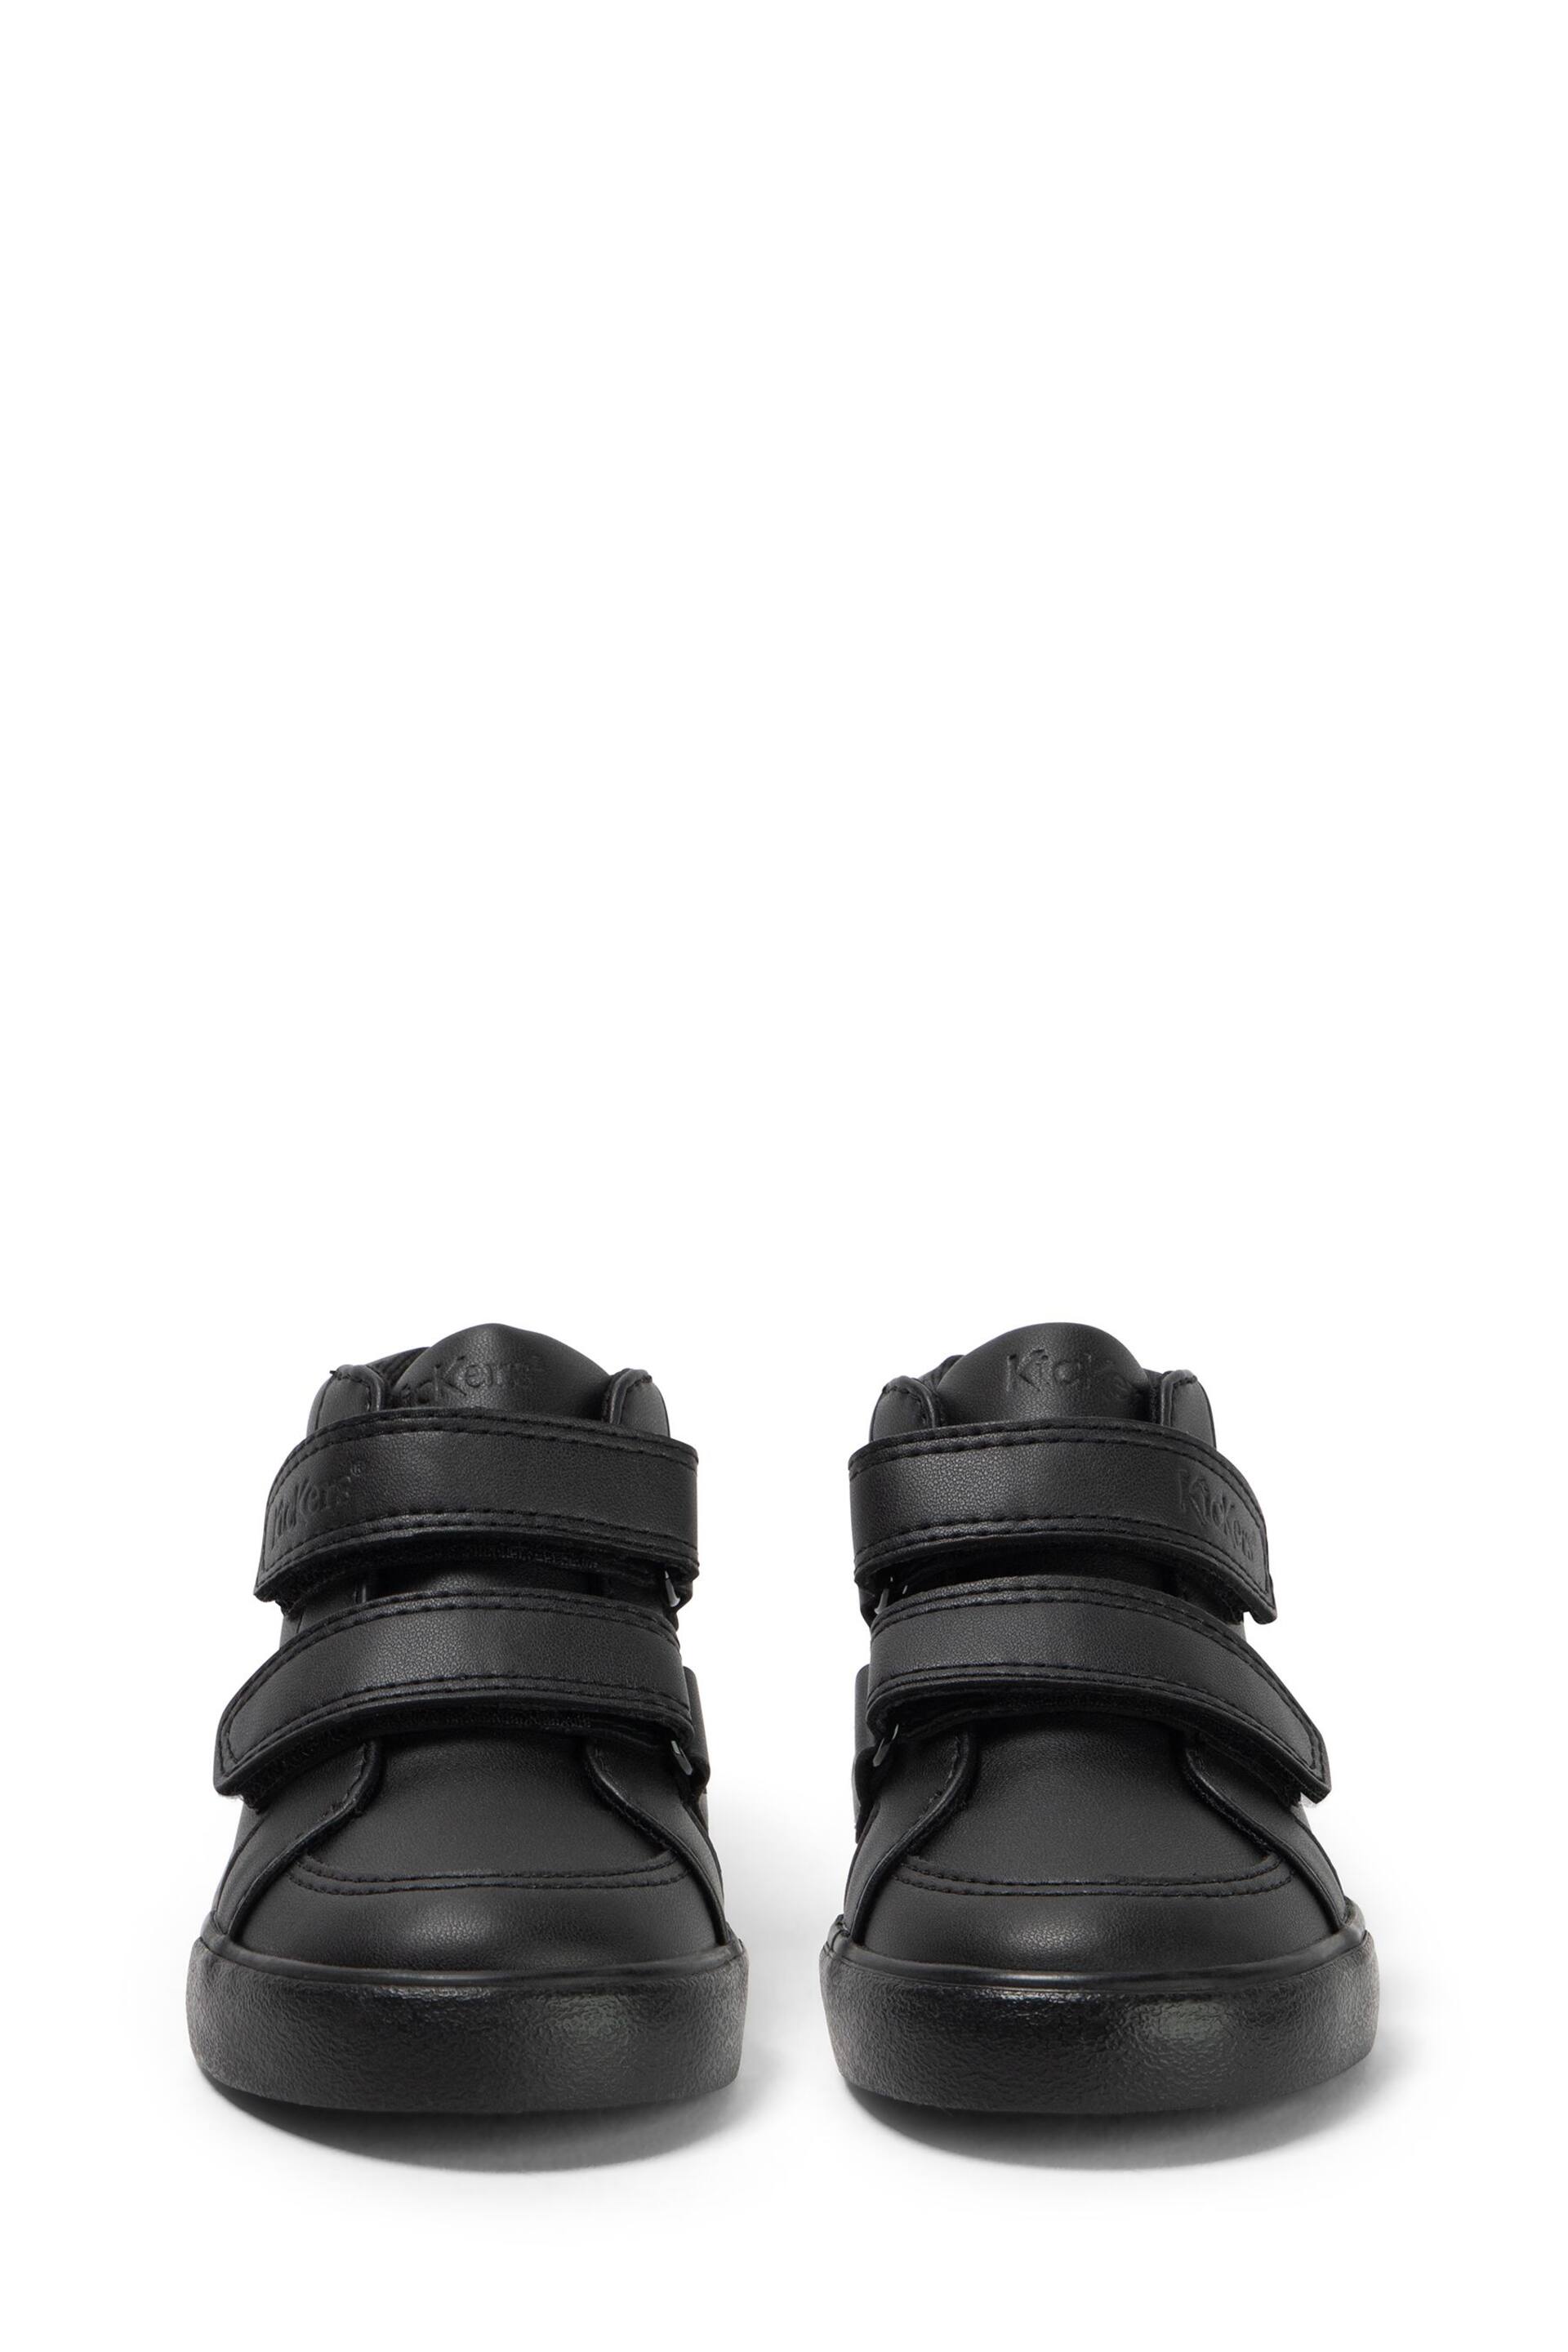 Kickers Infant Unisex Tovni Hi Vel Vegan Black Shoes - Image 3 of 6